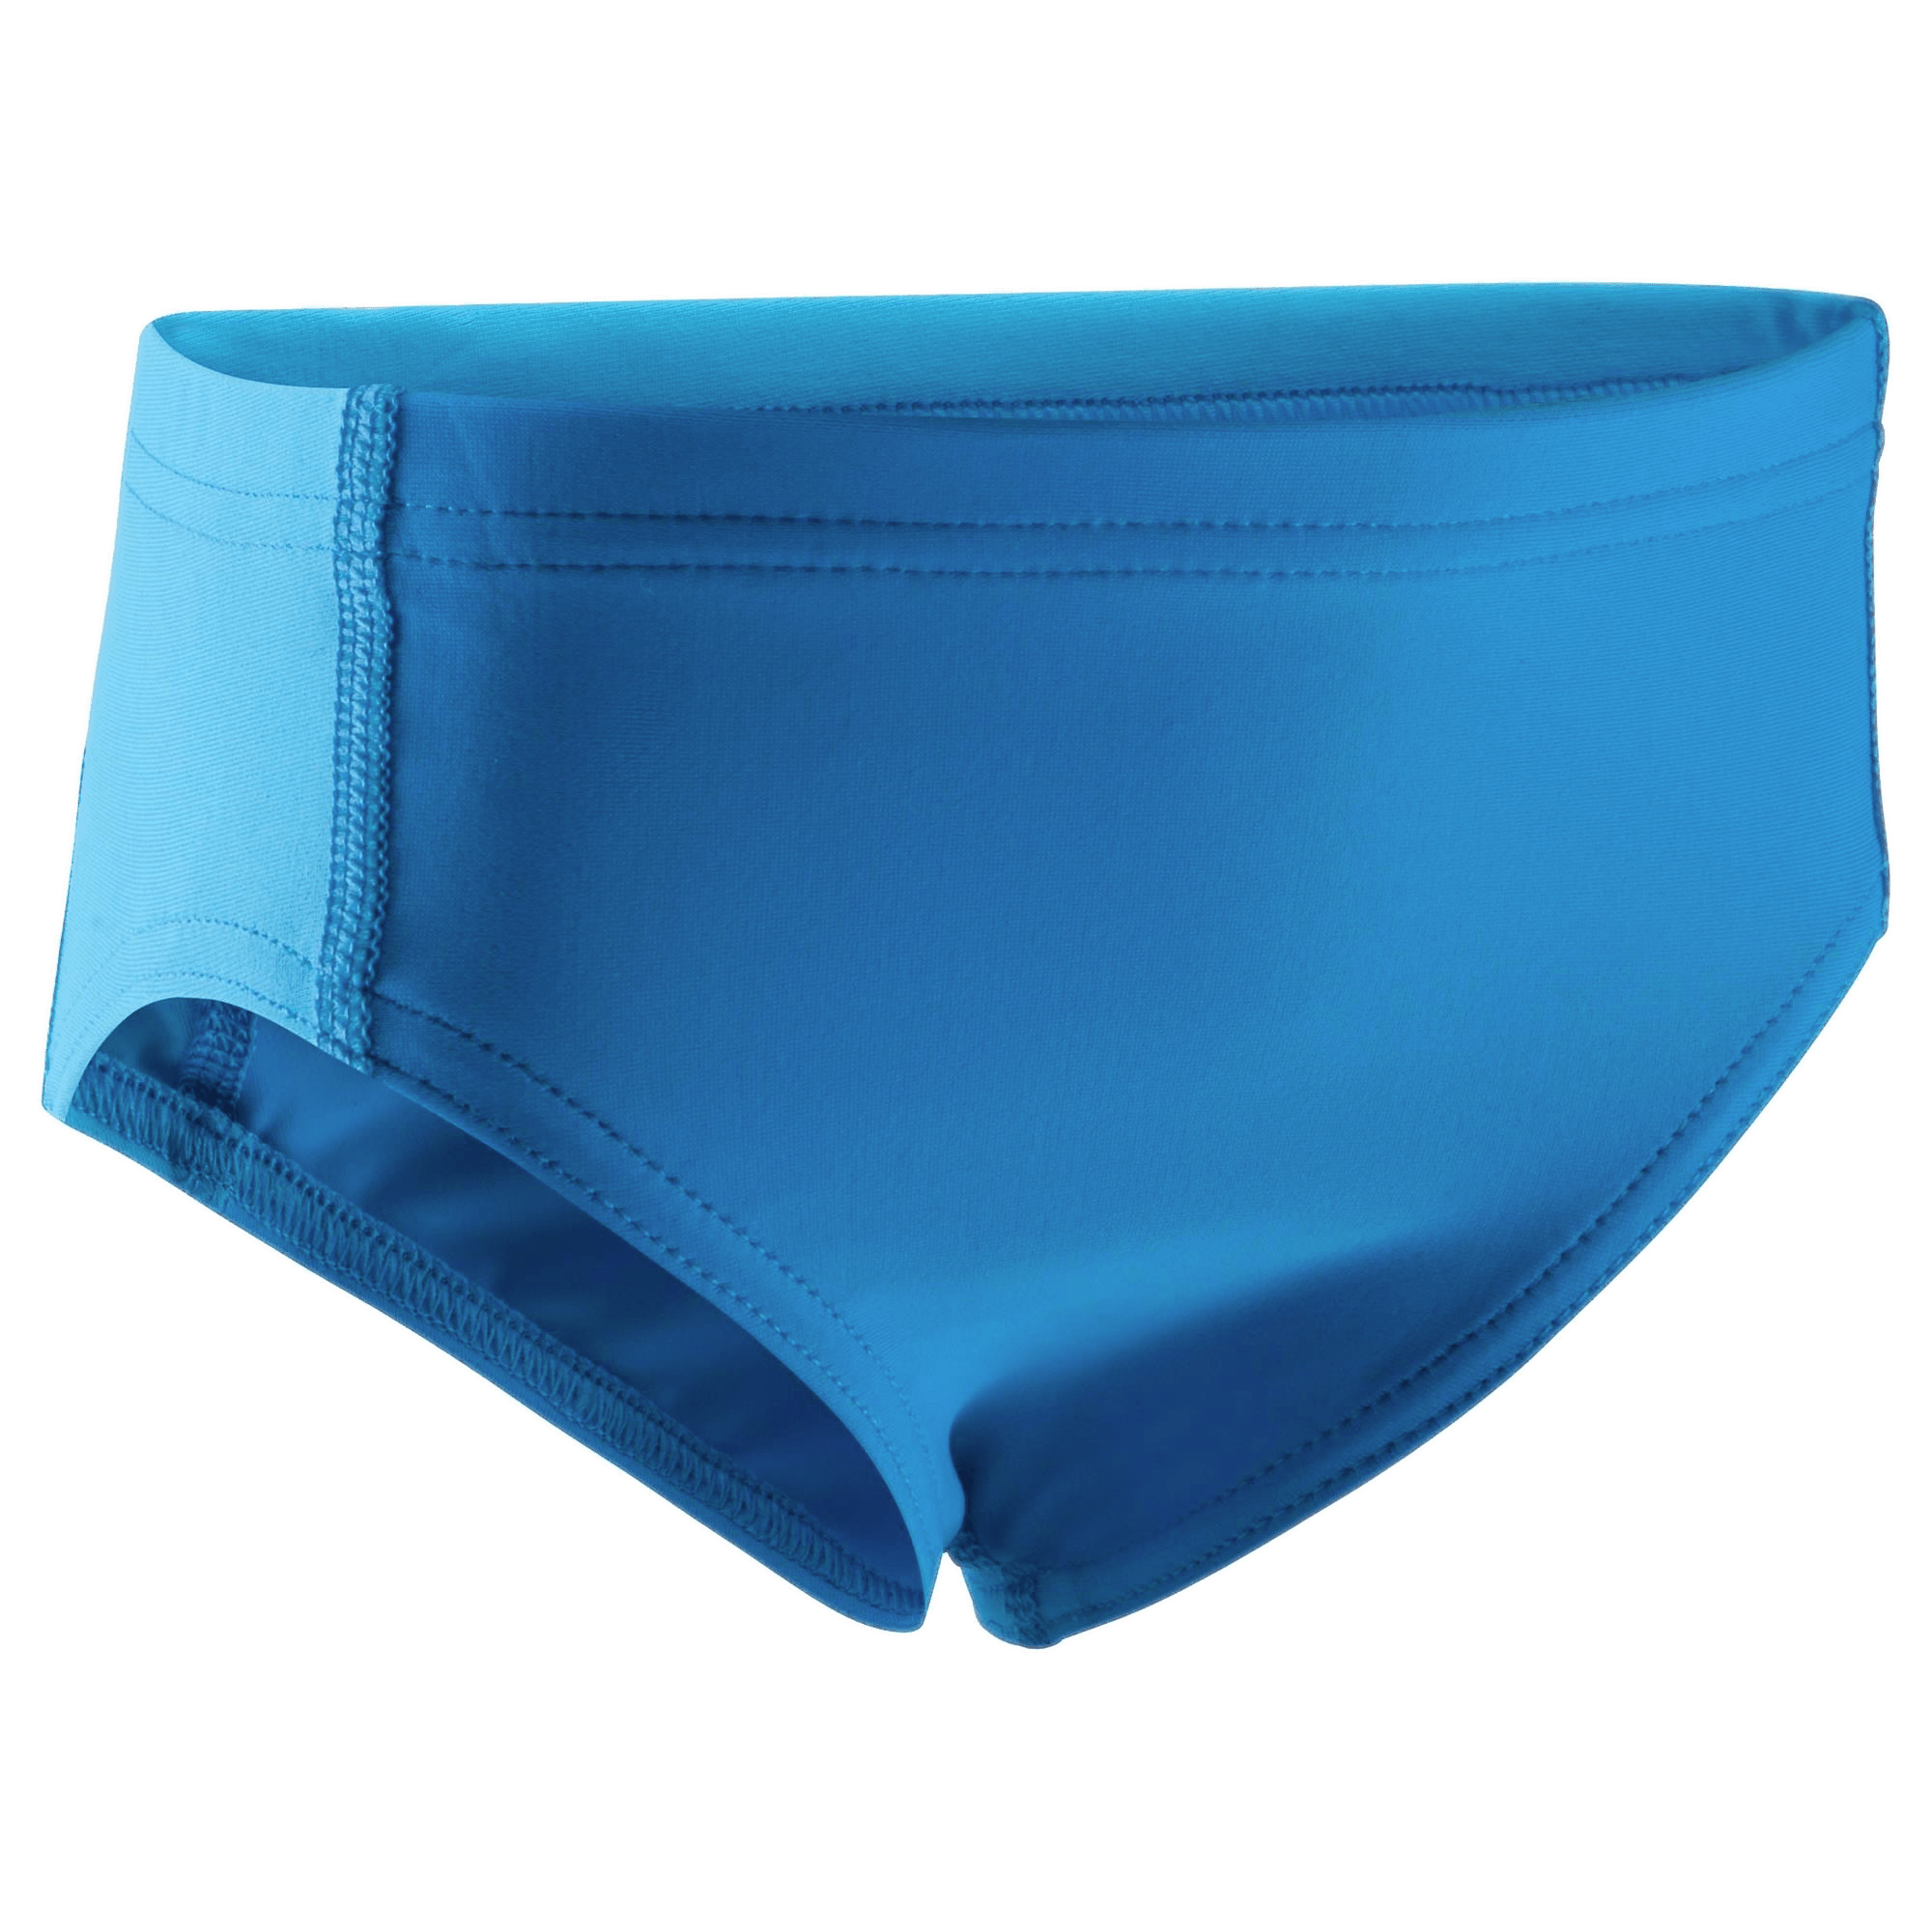 swimsuit clipart blue shorts